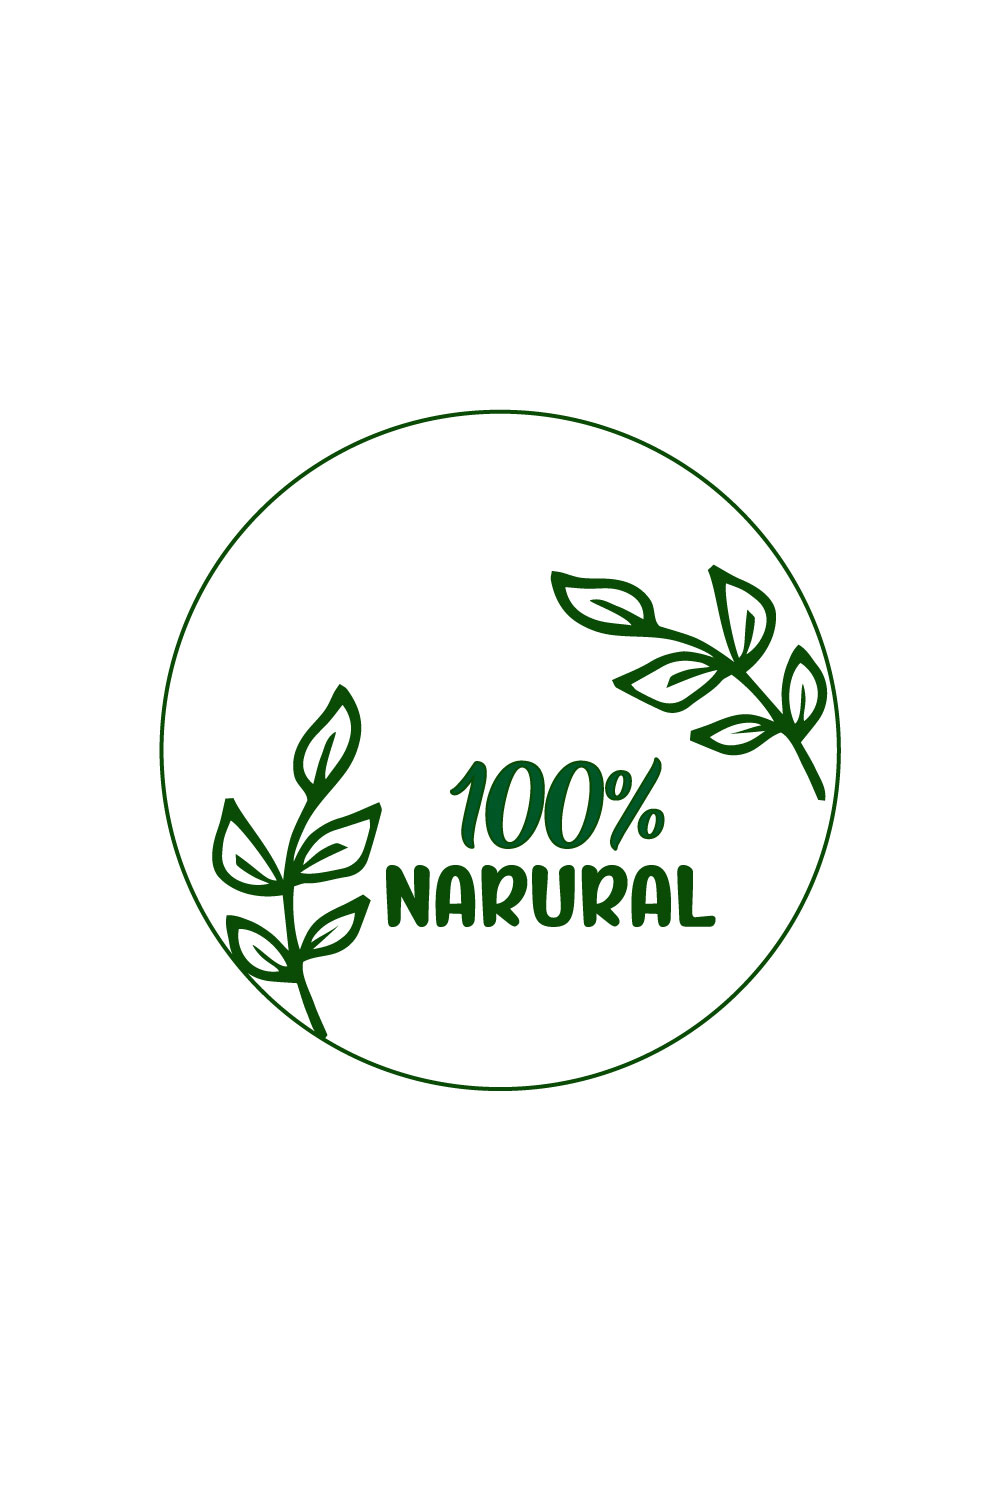 Free 100 natural logo pinterest preview image.